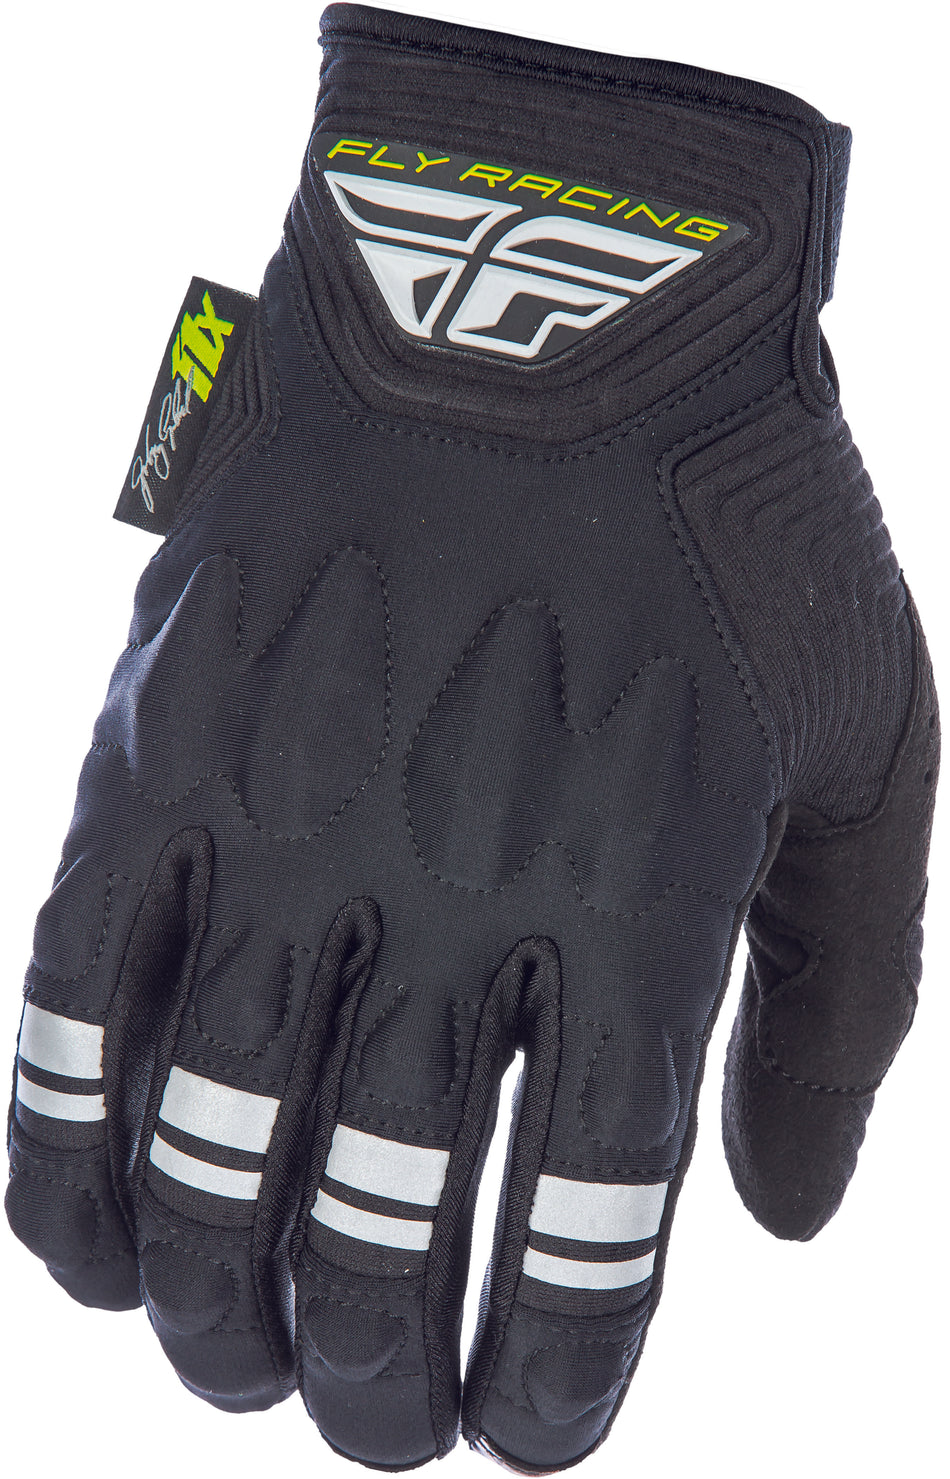 FLY RACING Johnny Campbell Sig Patrol Xc Lite Gloves Black/Grey 370-68008